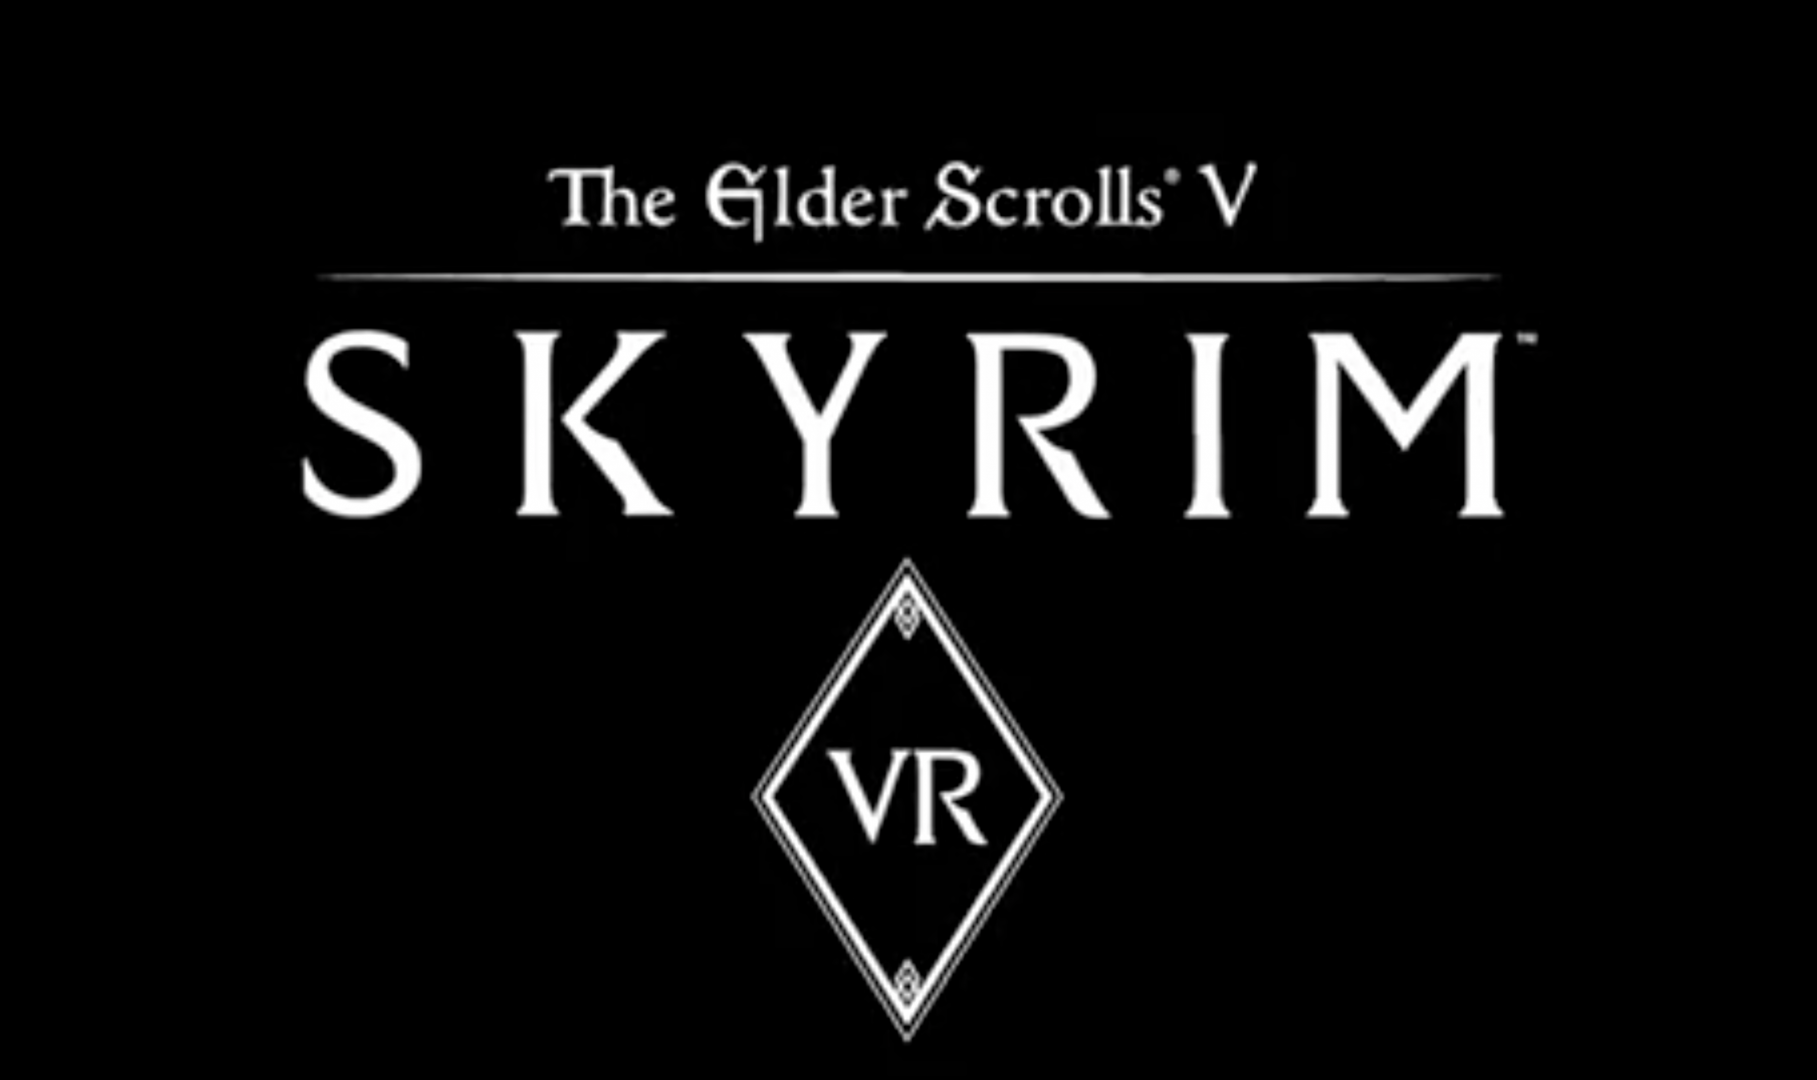 The-Elder-Scrolls-V-Skyrim-VR